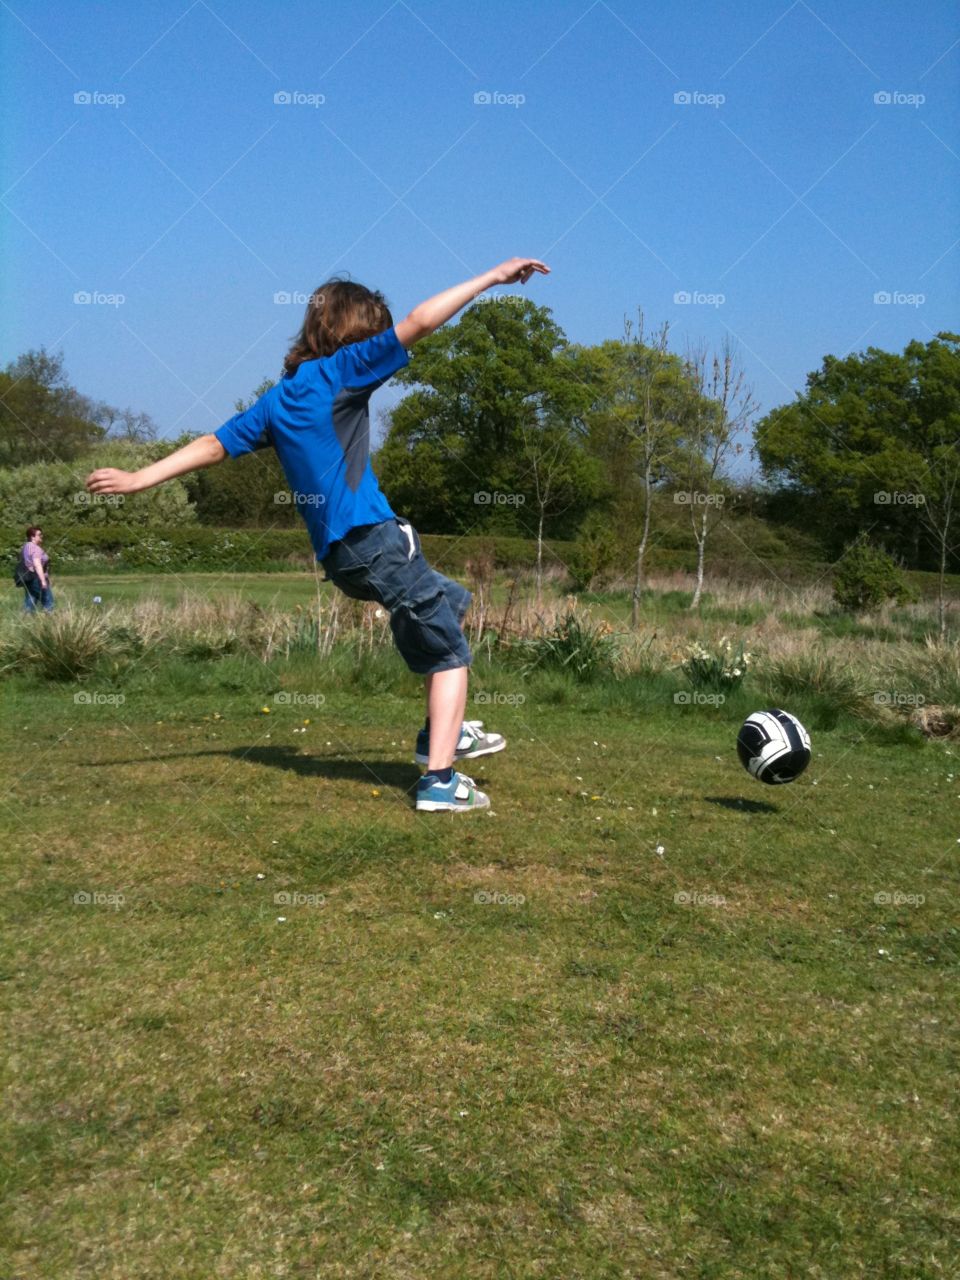 Outdoor summer fun in the sun. Football on the grass. Loving life! Football skills. 